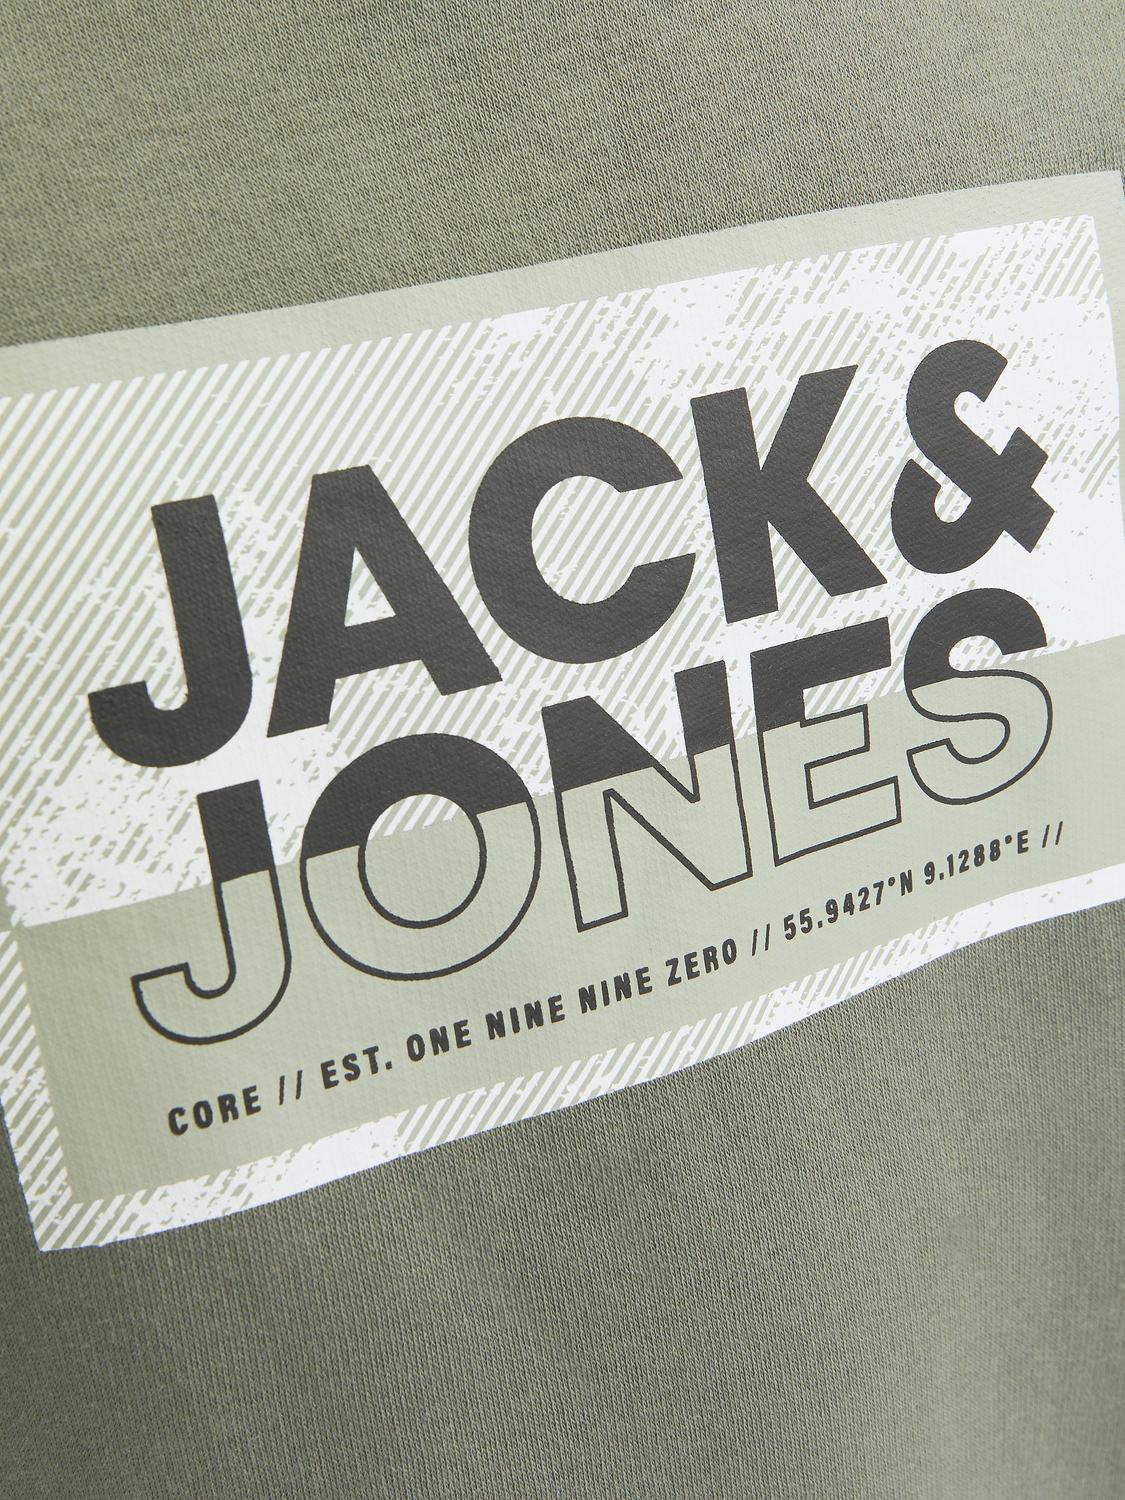 Jack & Jones Printet Sweatshirt med rund hals Mini -Agave Green - 12257441